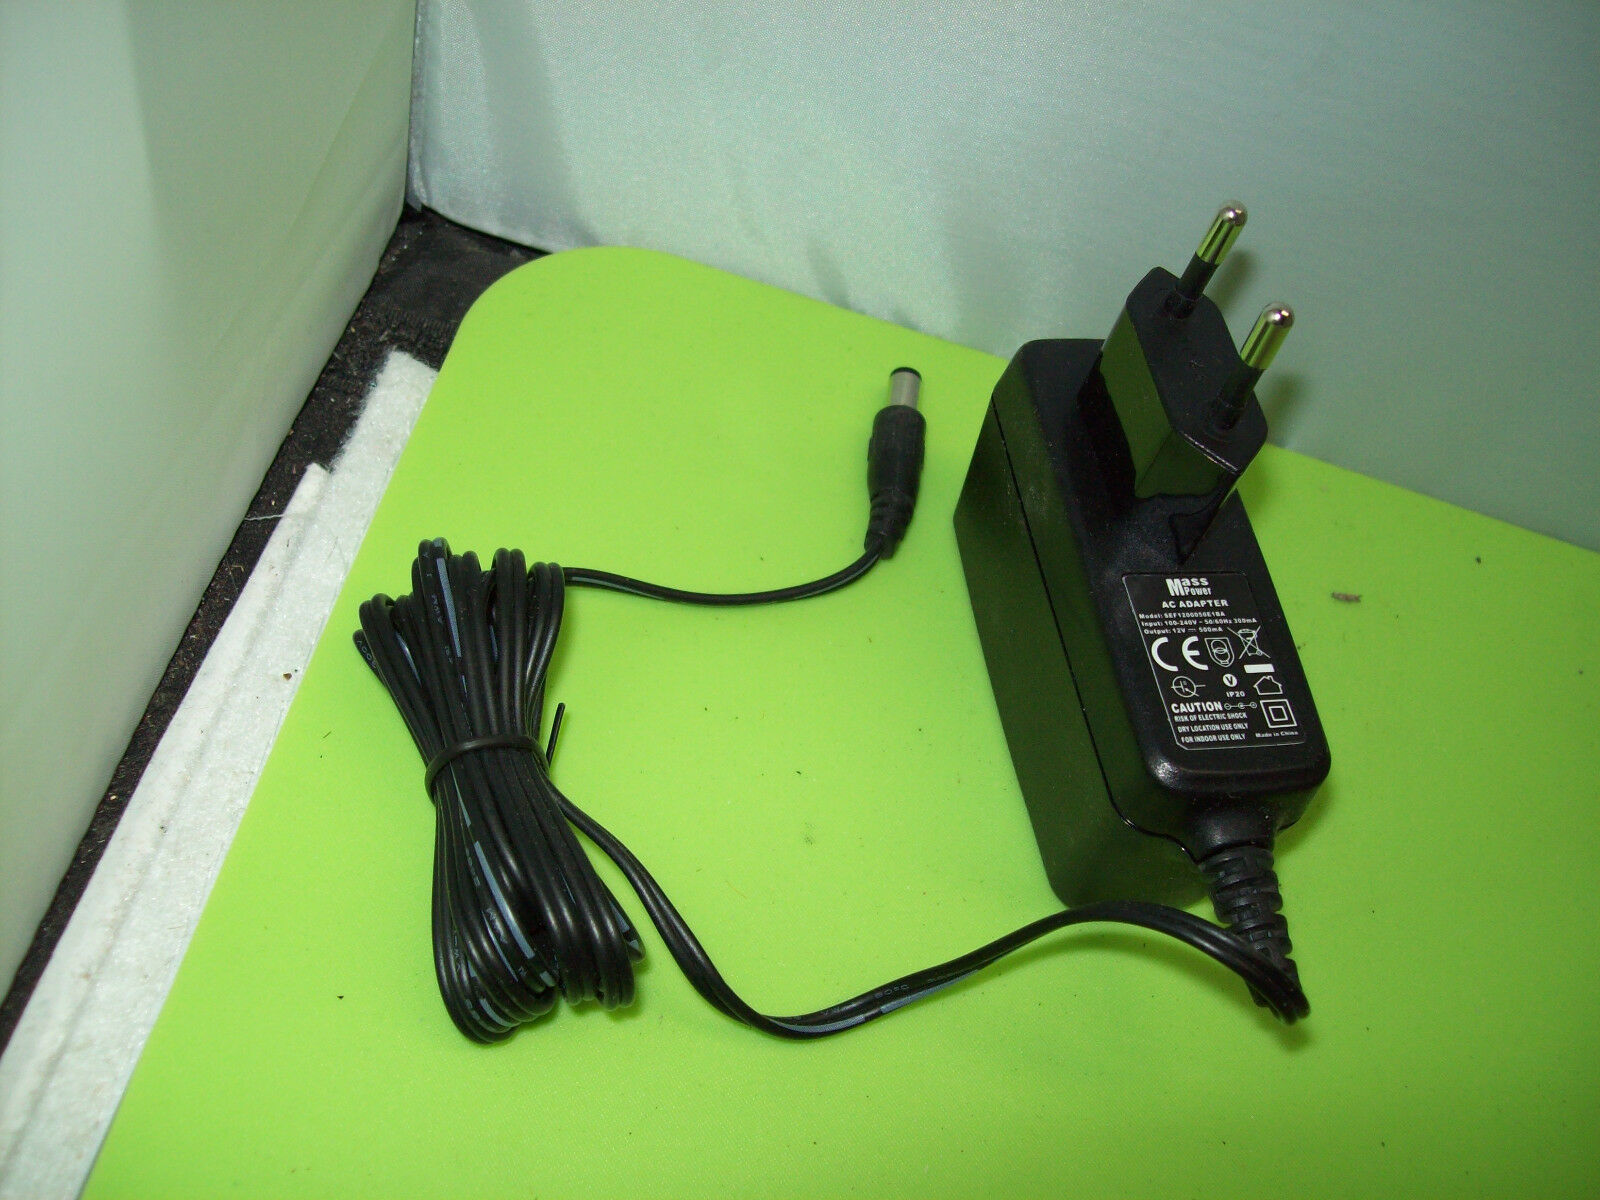 Original Power Supply AC Adapter Mass Power sef1200050e1ba 12v Marke: mass Her